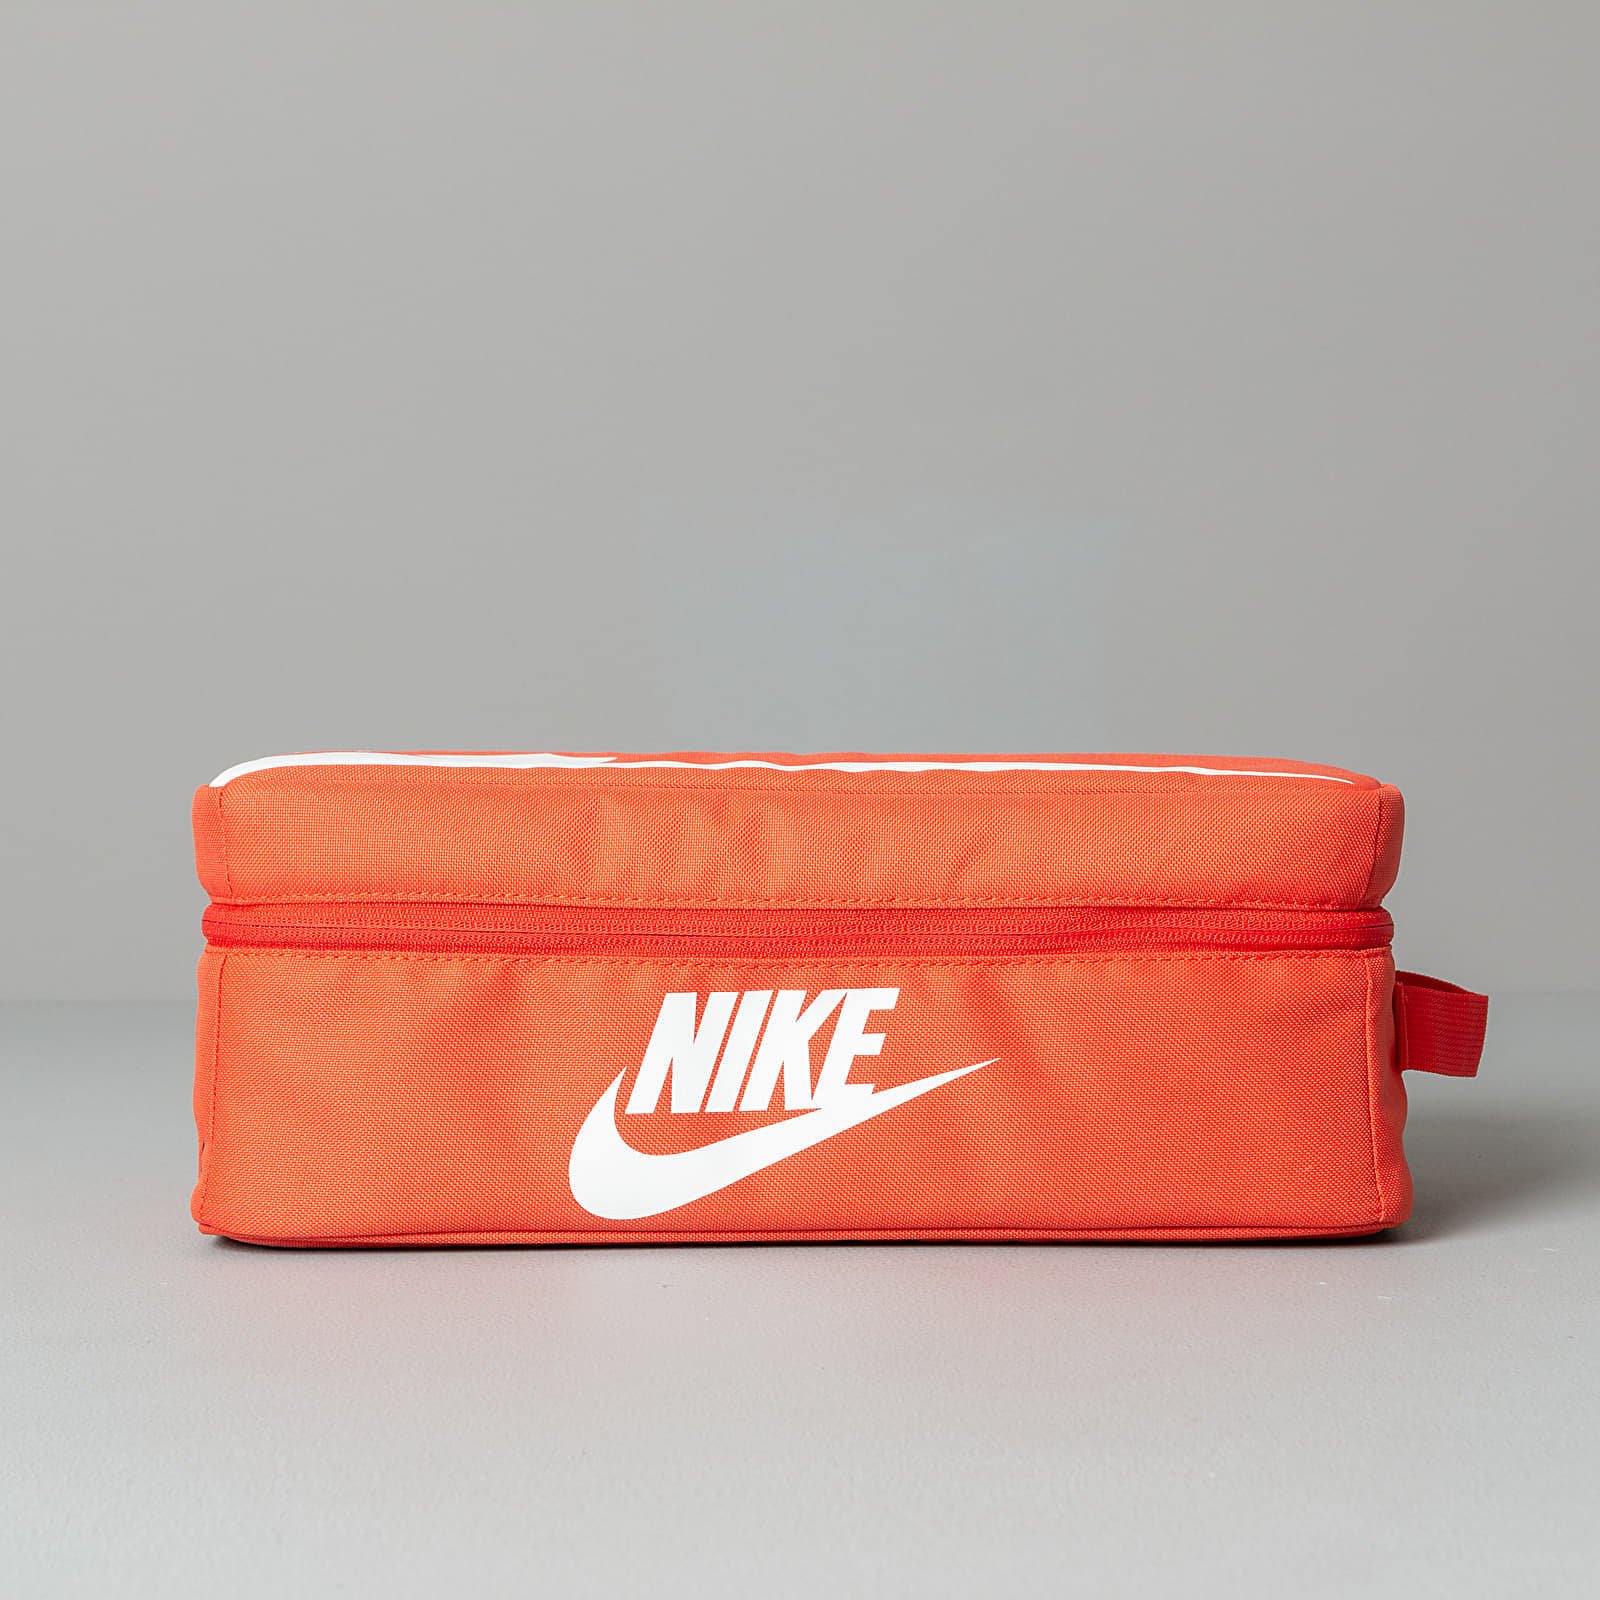 Nike Shoe Box Bag